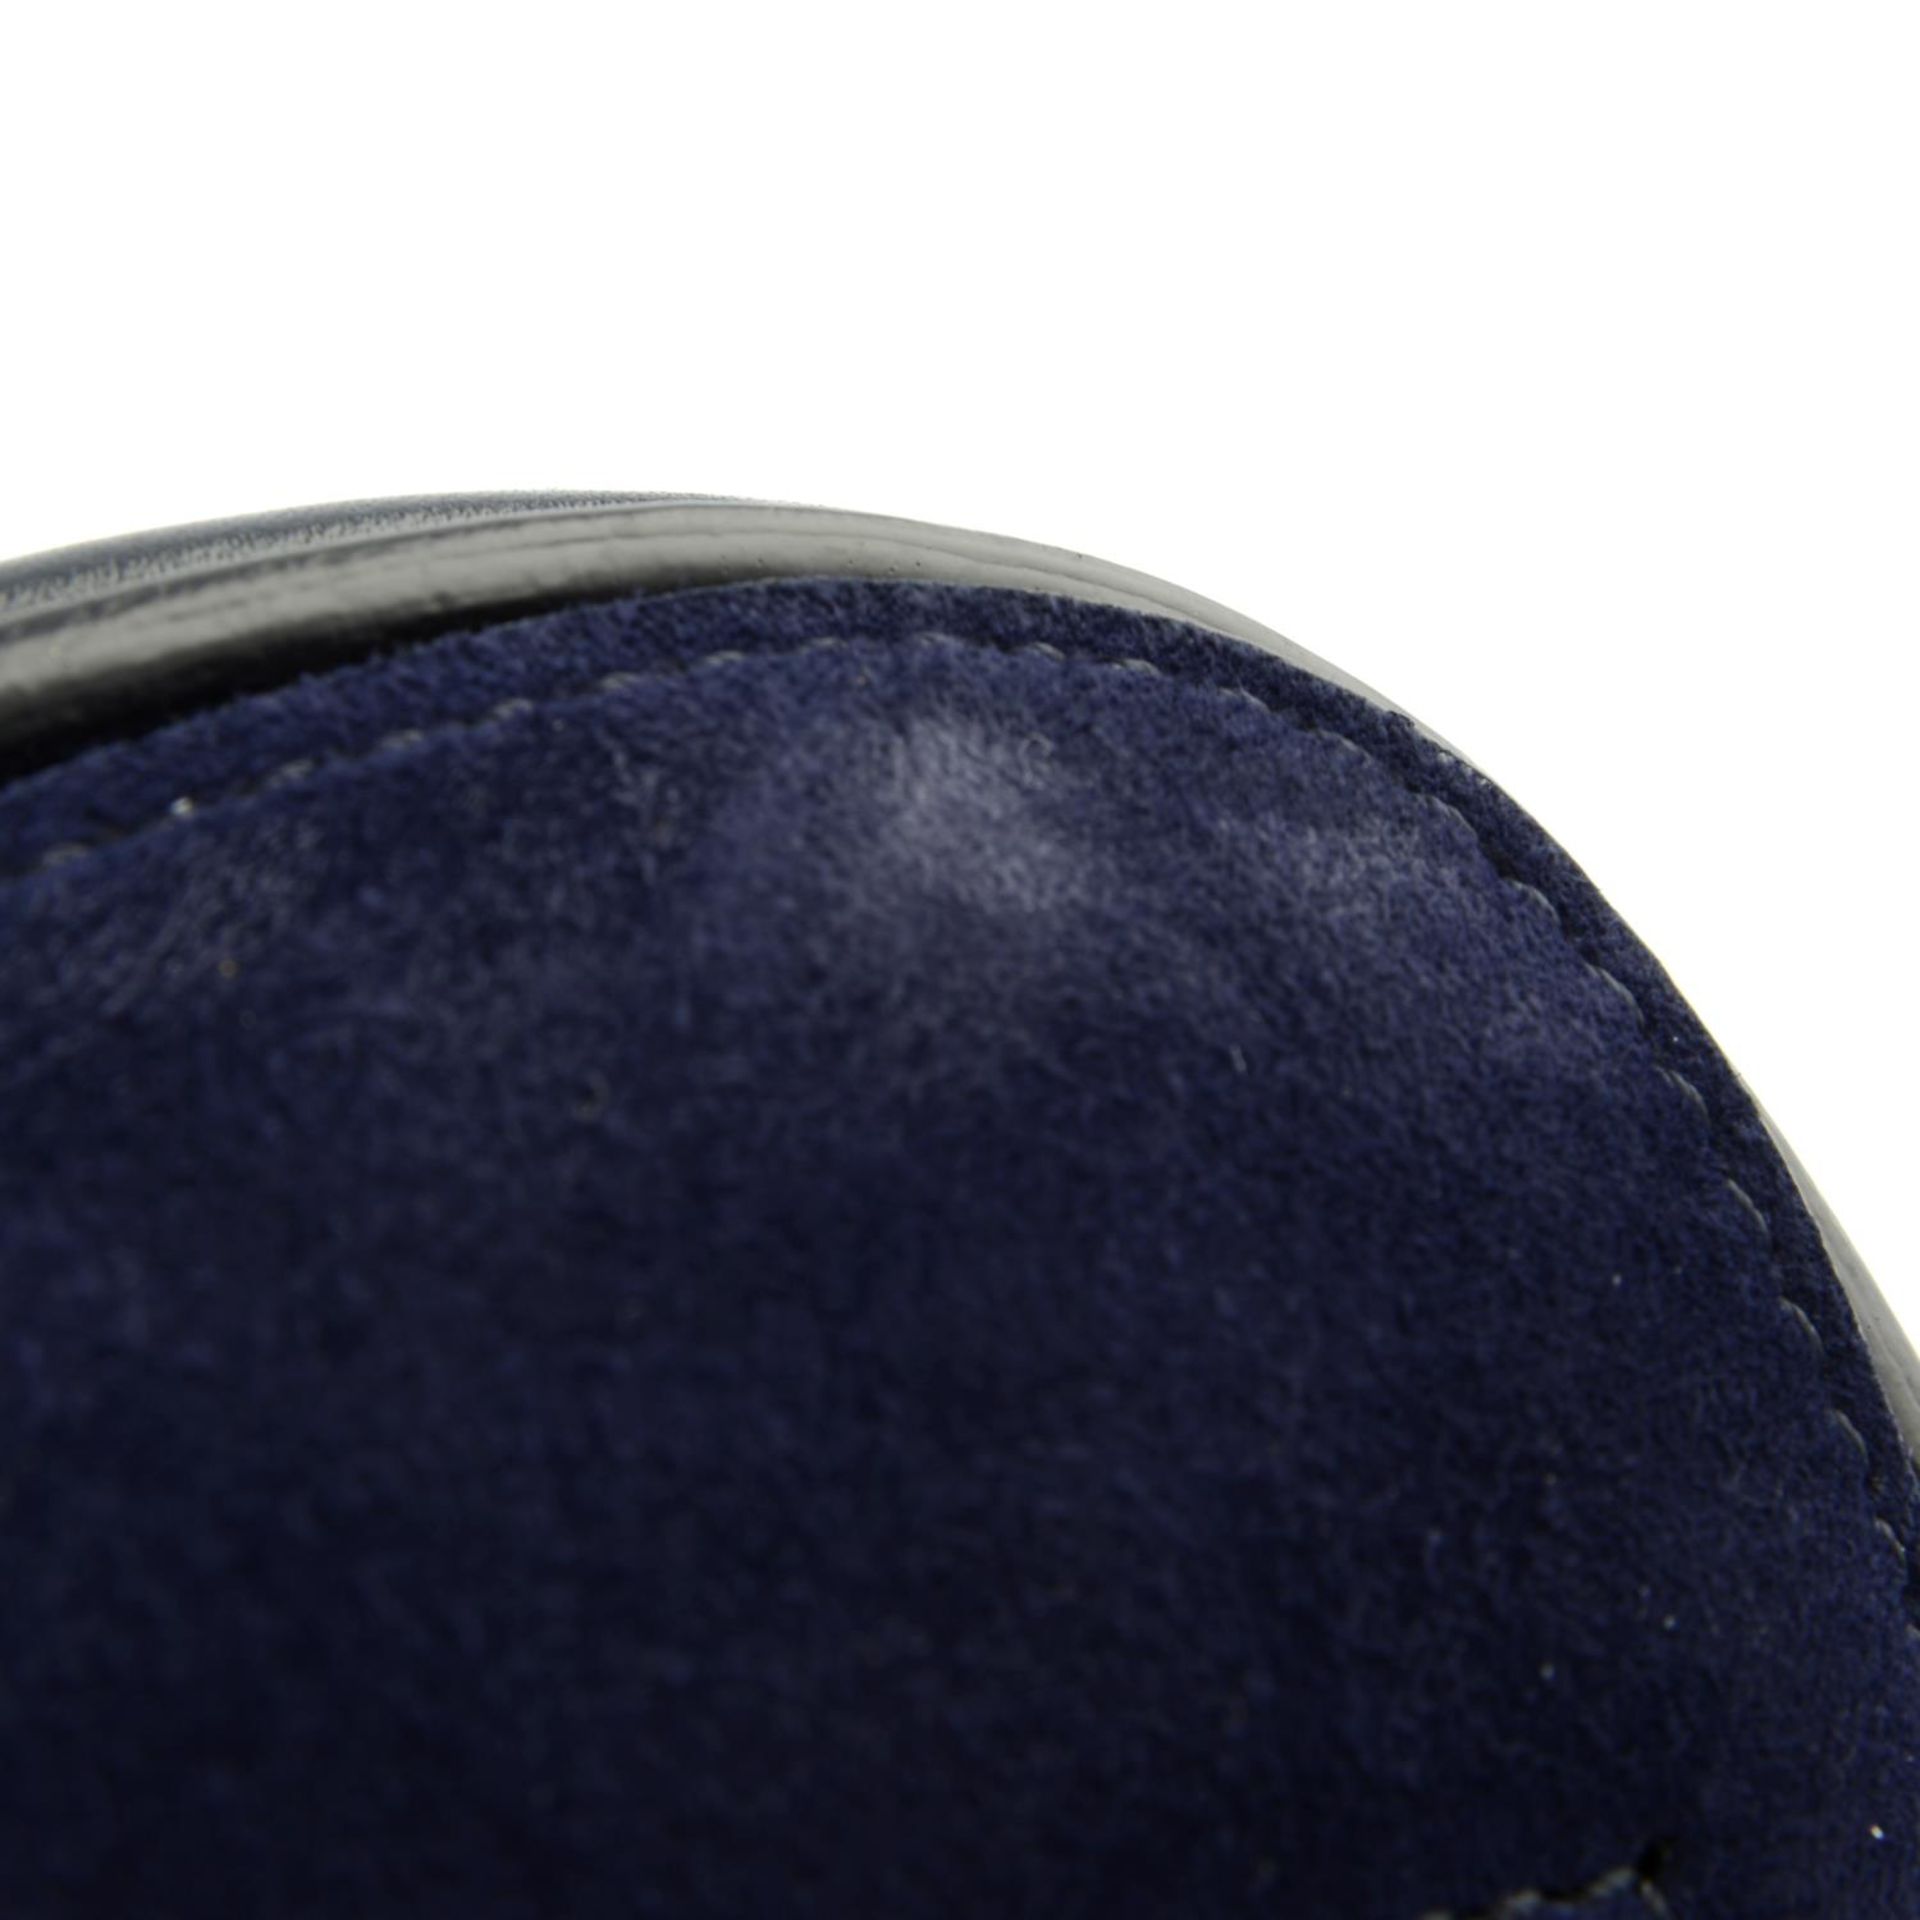 ALEXANDER MCQUEEN - a midnight blue python skin mini Heroine handbag. - Image 8 of 8